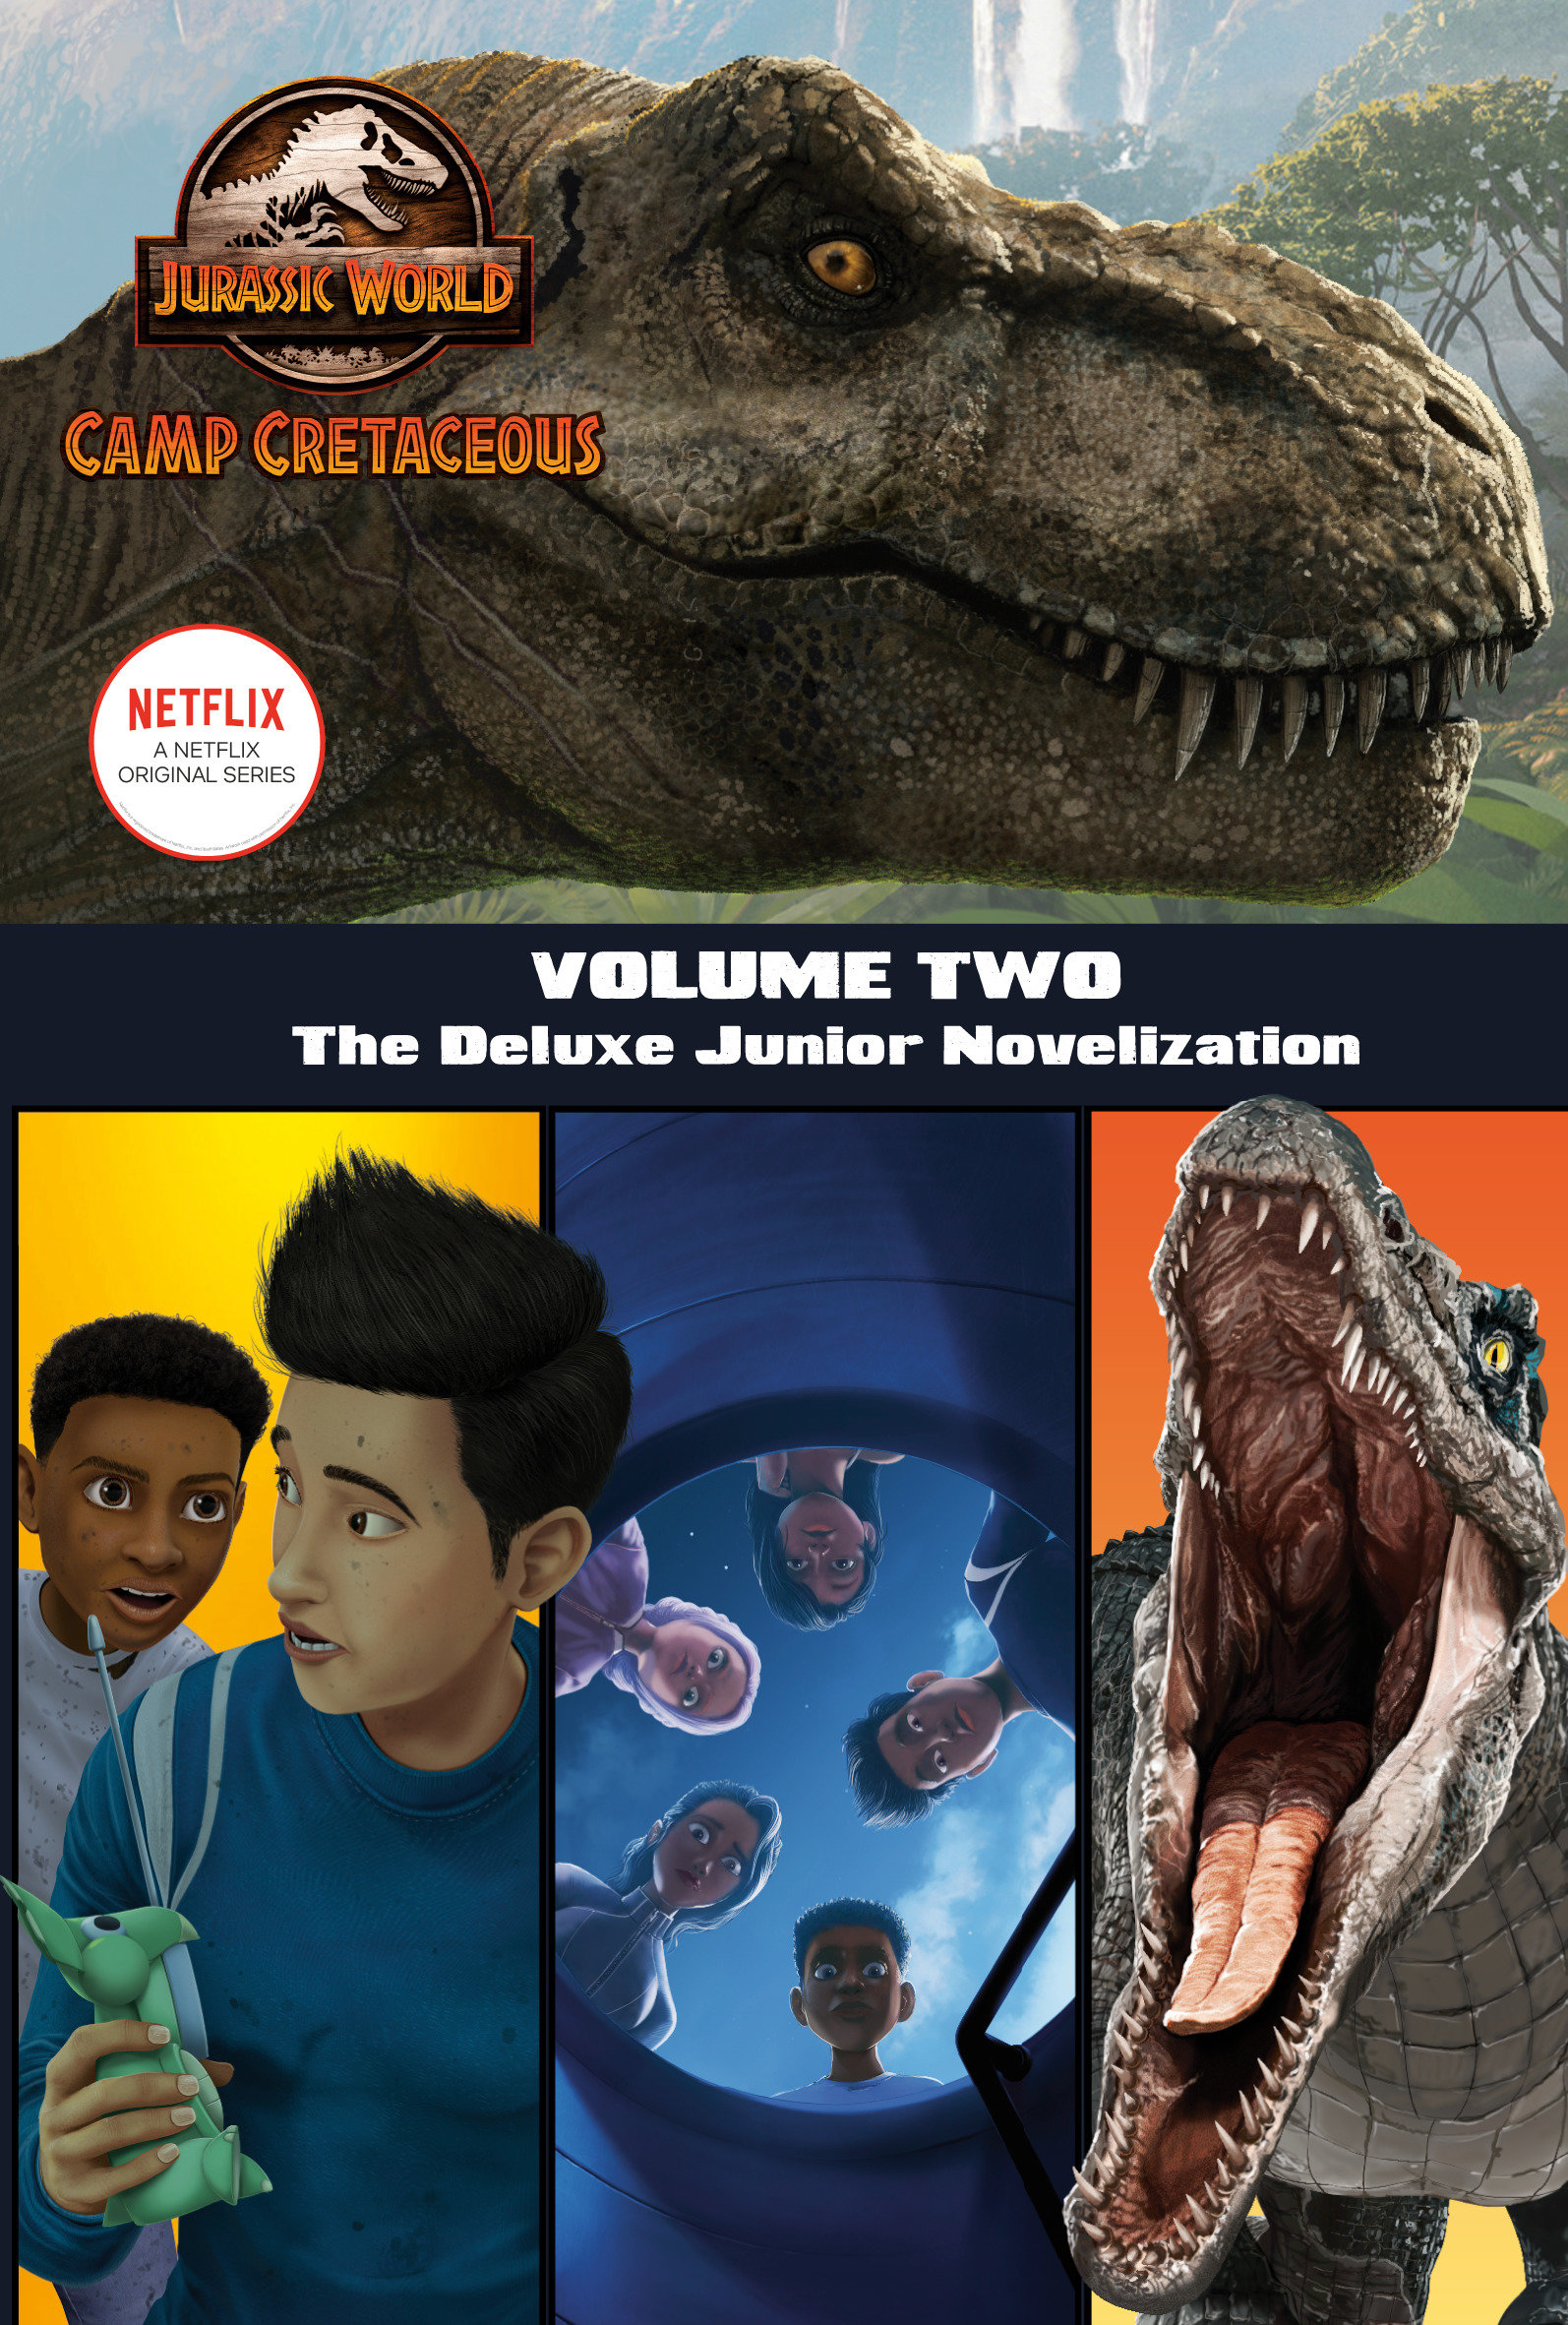 Camp Cretaceous, Volume Two: The Deluxe Junior Novelization (Jurassic World: Camp Cretaceous) (Hardcover Book)